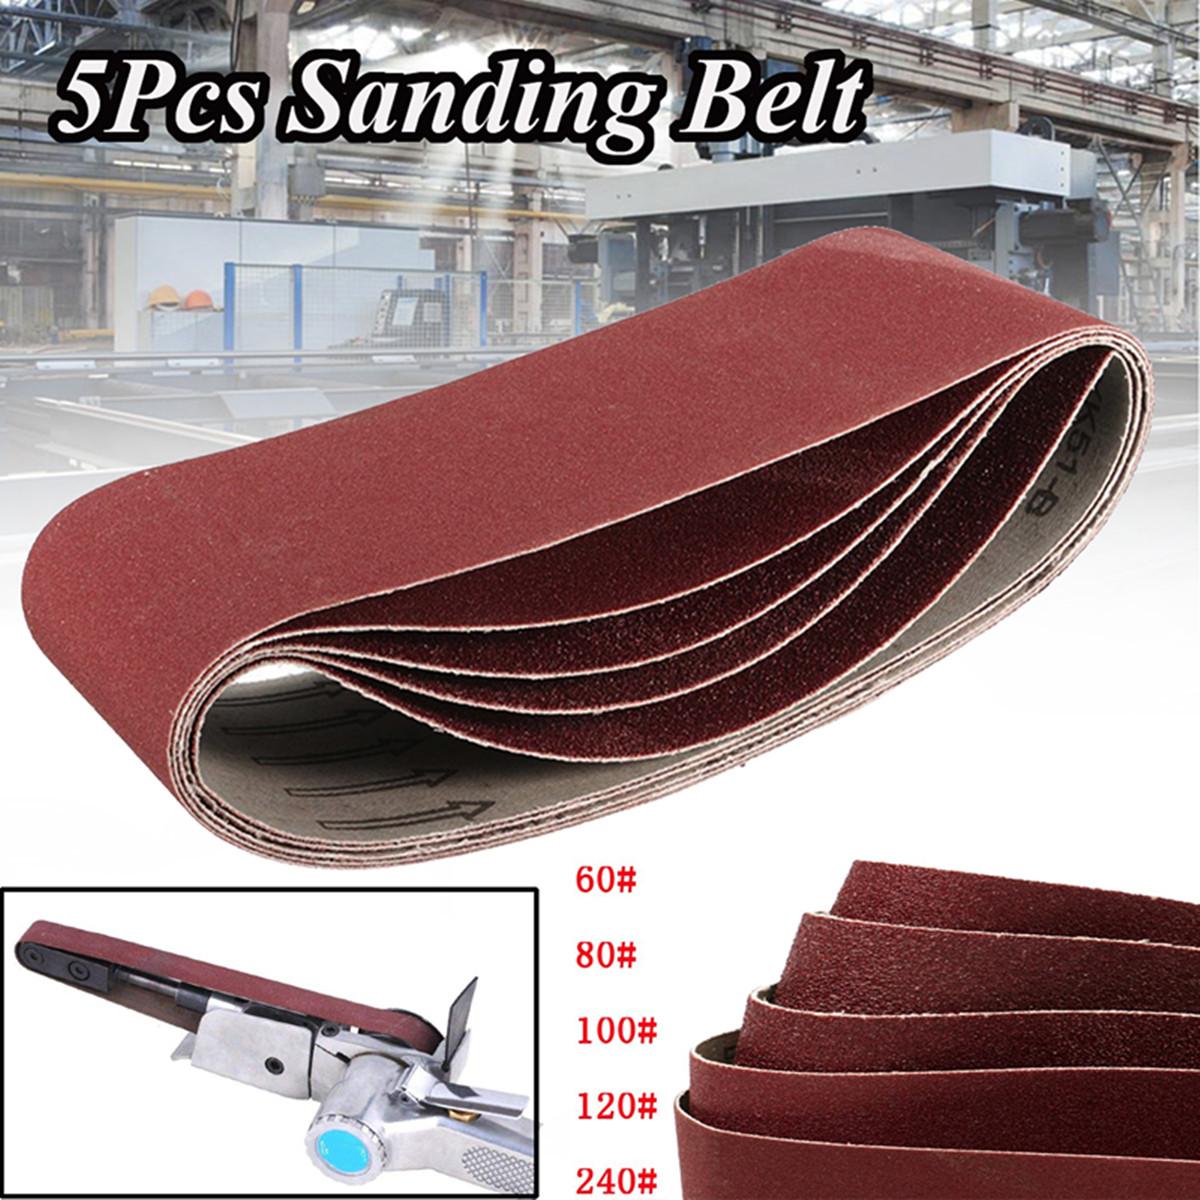 5Pcs 75x457mm 3"x18" Sanding Belts Grits 60 80 100 120 240 Sander Power Tool For Metal Wood Working